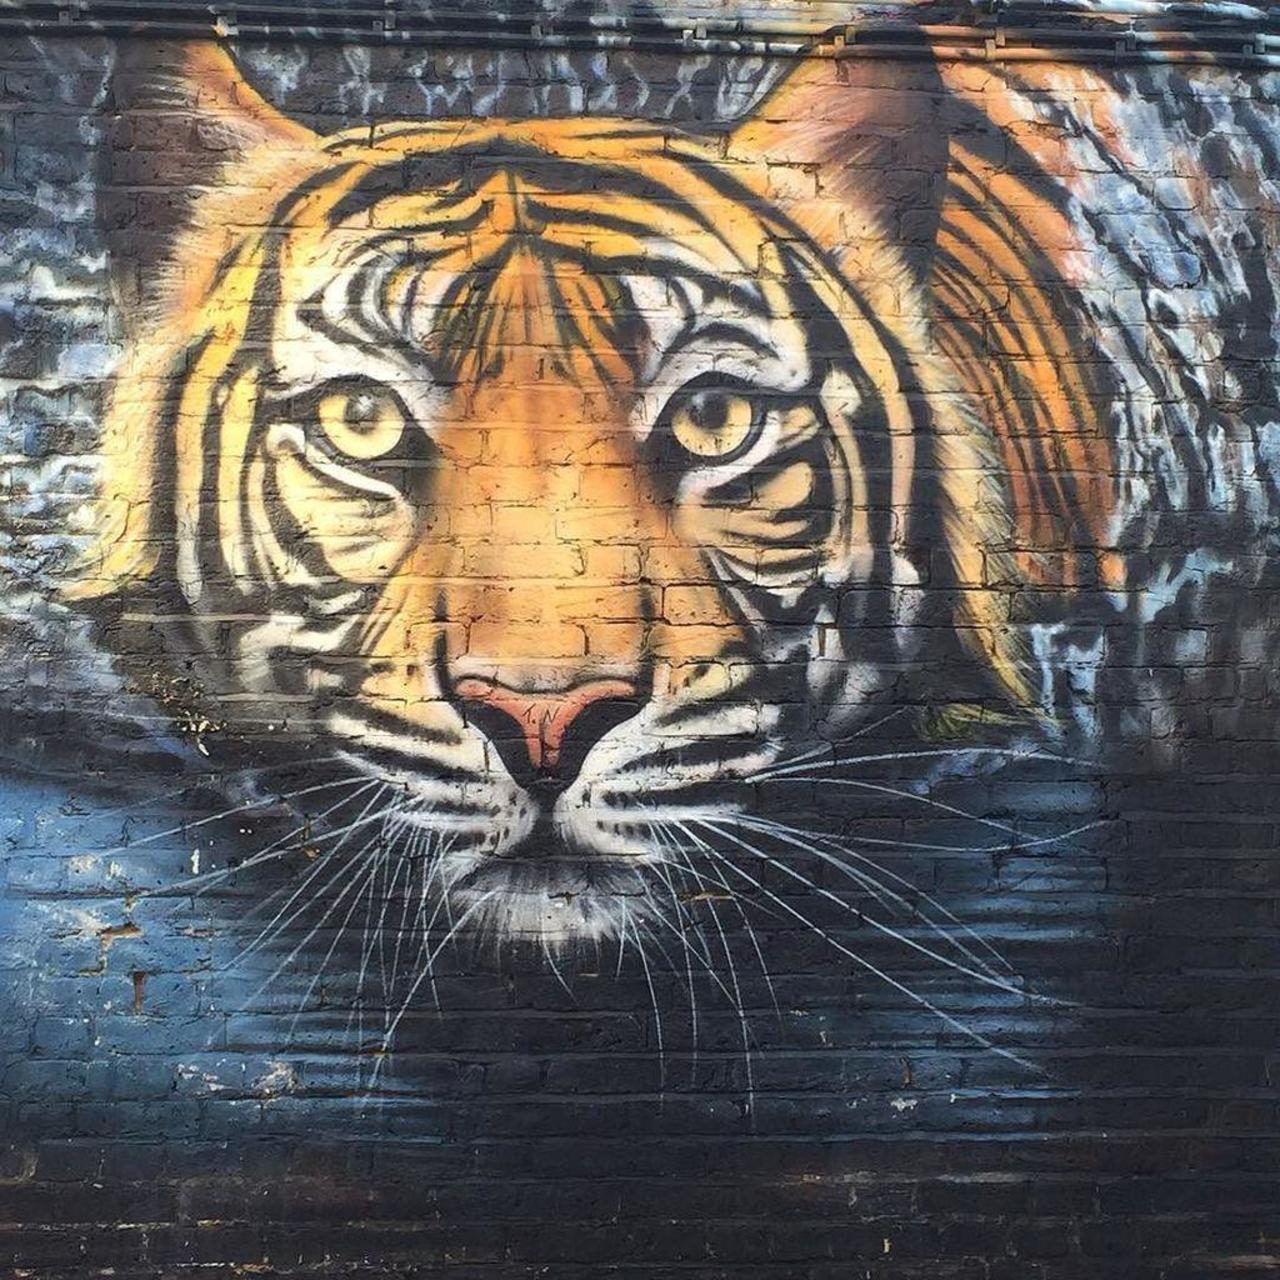 Have a roaring week everybody!!!
#graffiti #streetart #camden #art #london #love #enjoy #… http://ift.tt/1FP1AwW http://t.co/o5uKZ1EHas